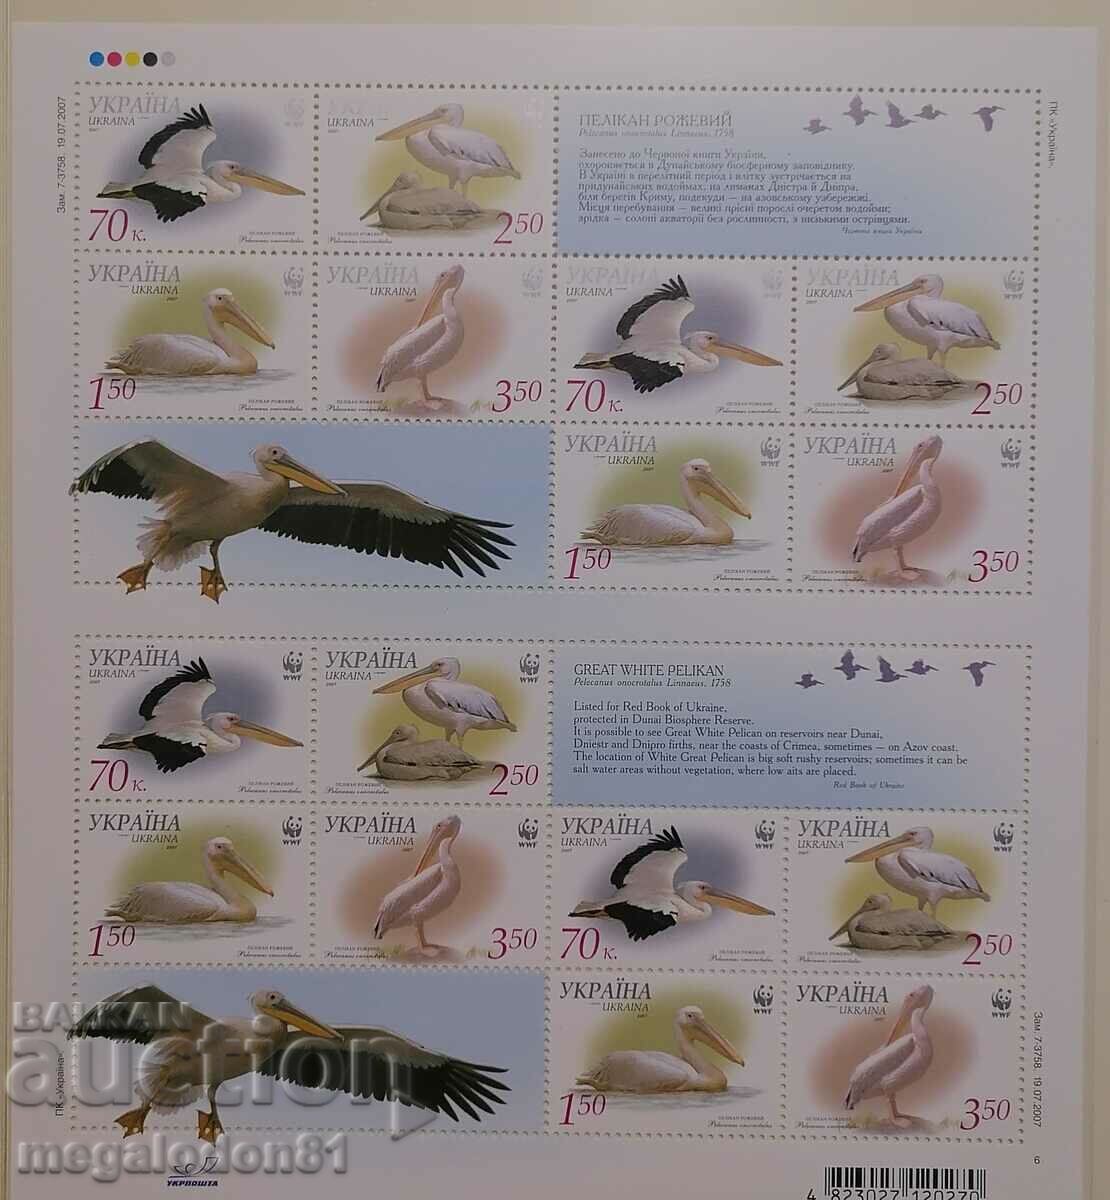 Ukraine - WWF, pelican